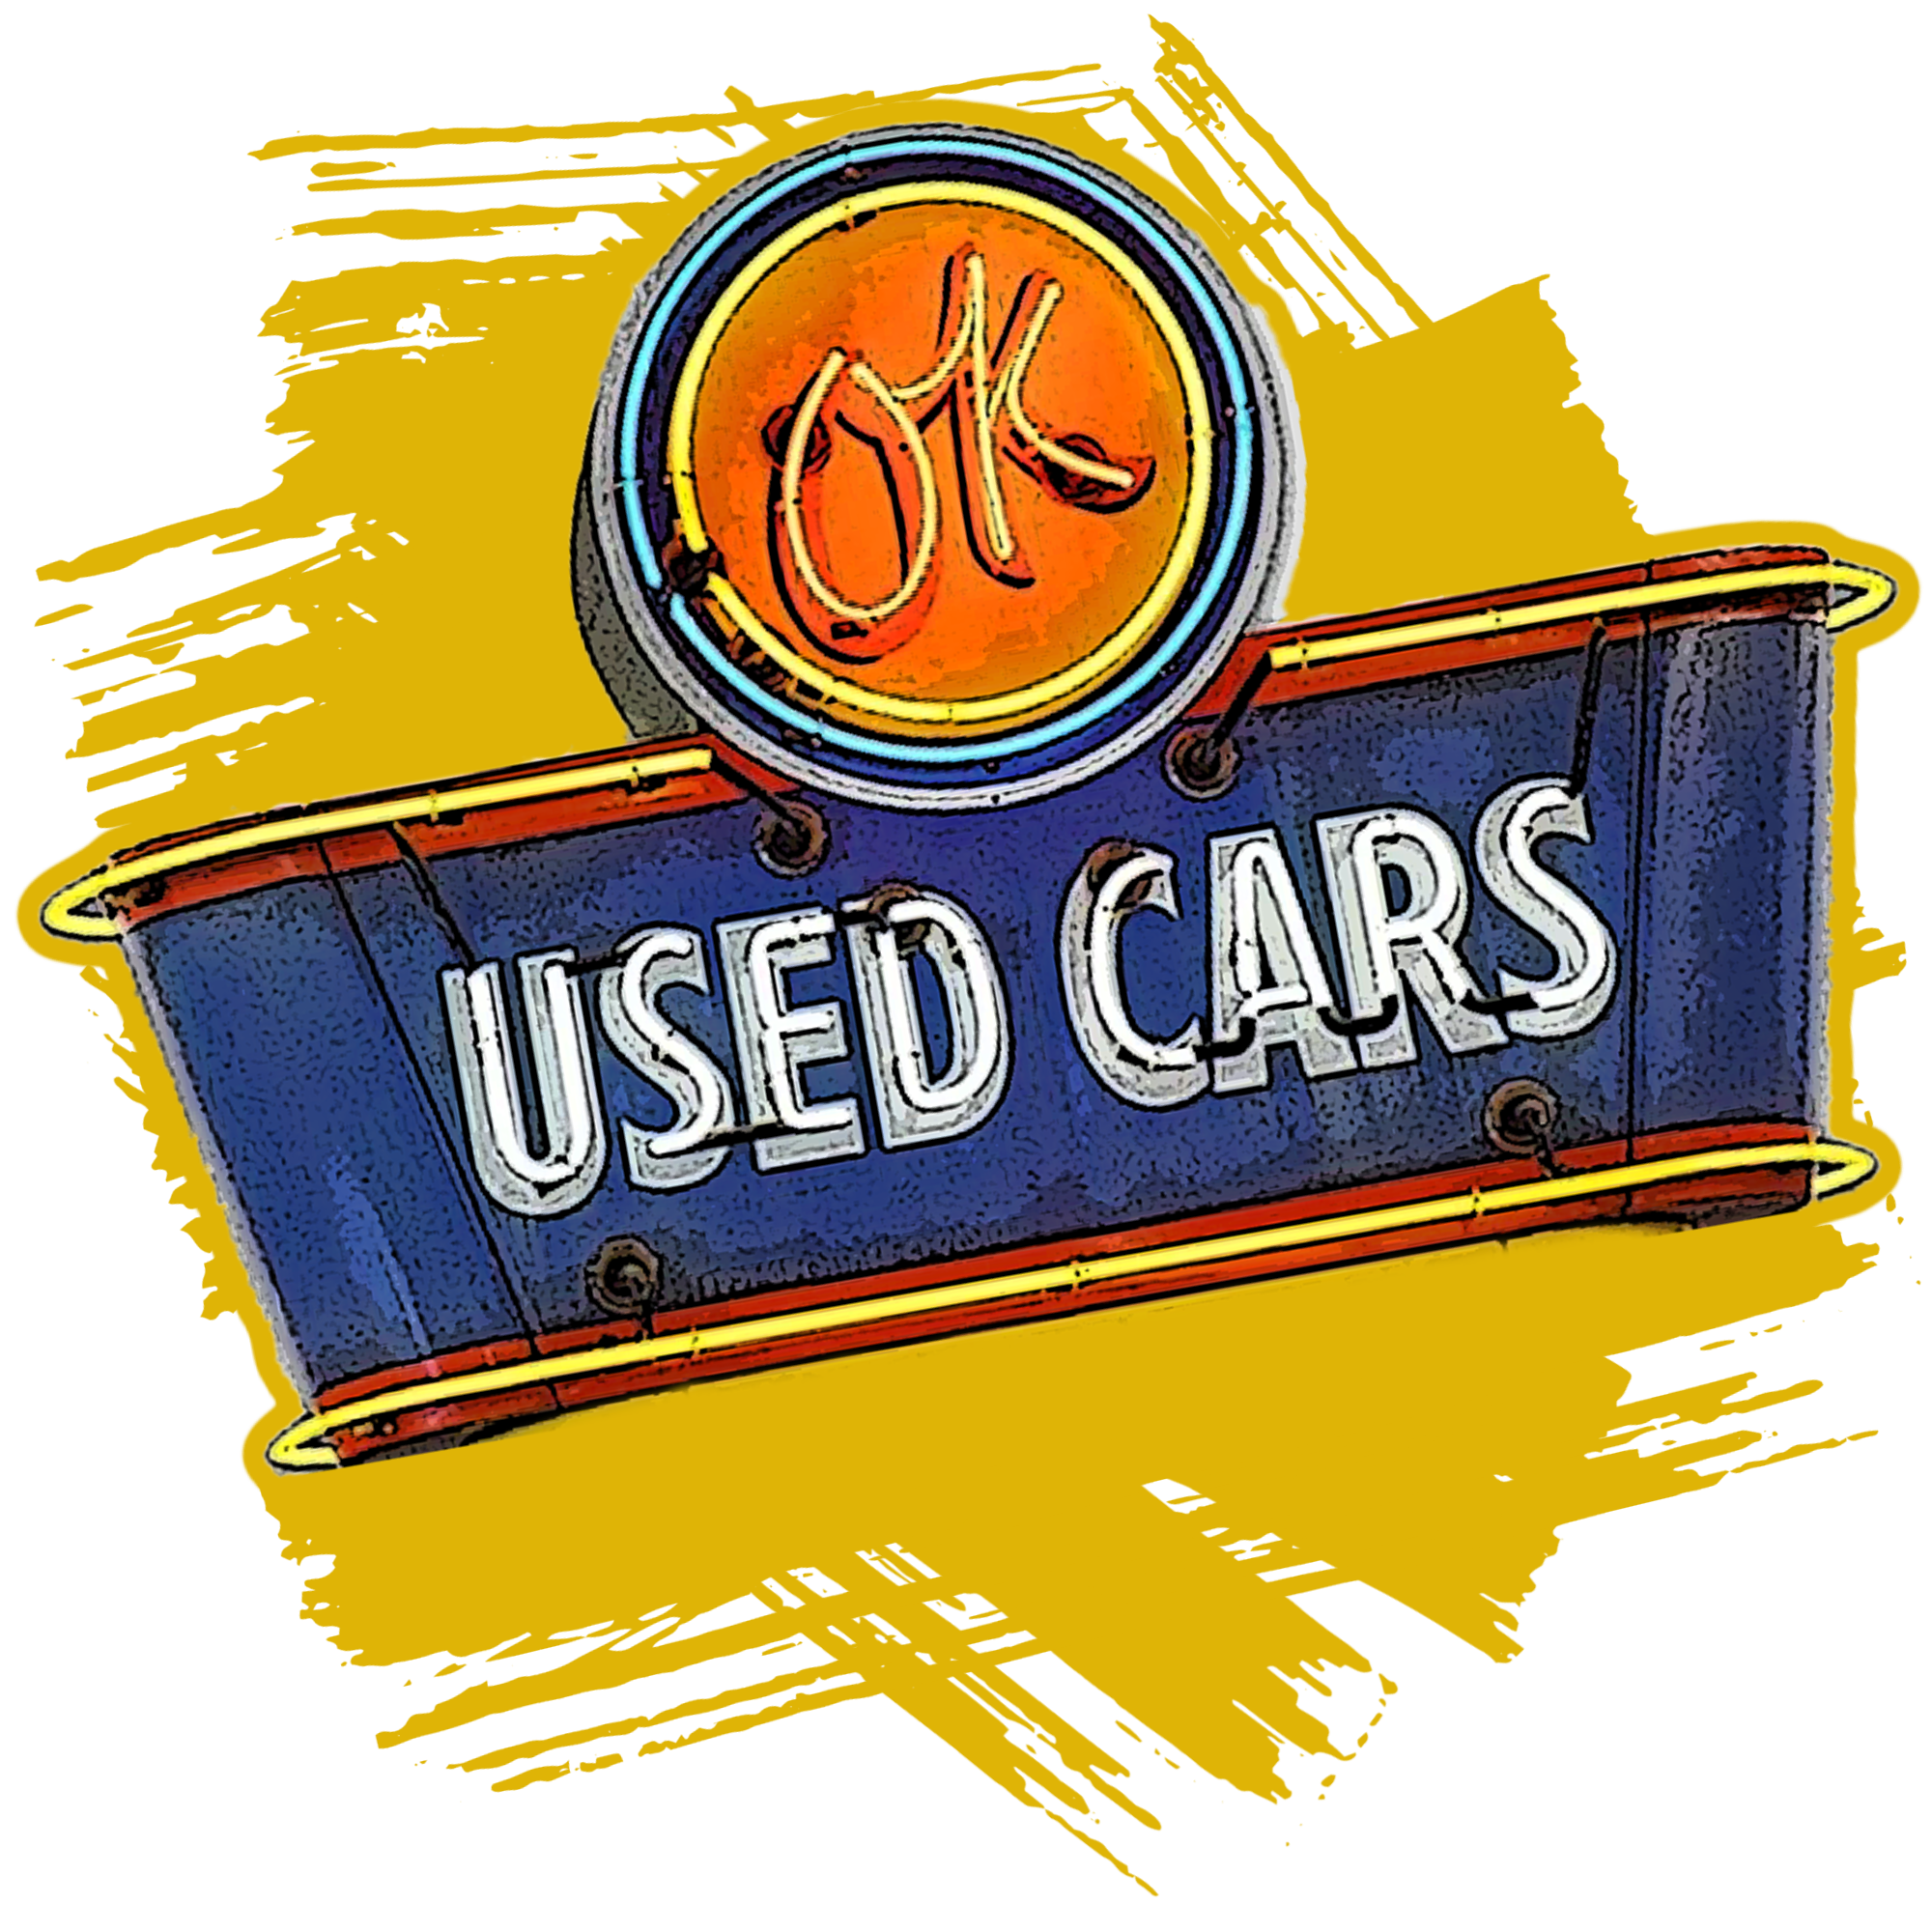 OK Used Cars Neon Vintage Sign - Image